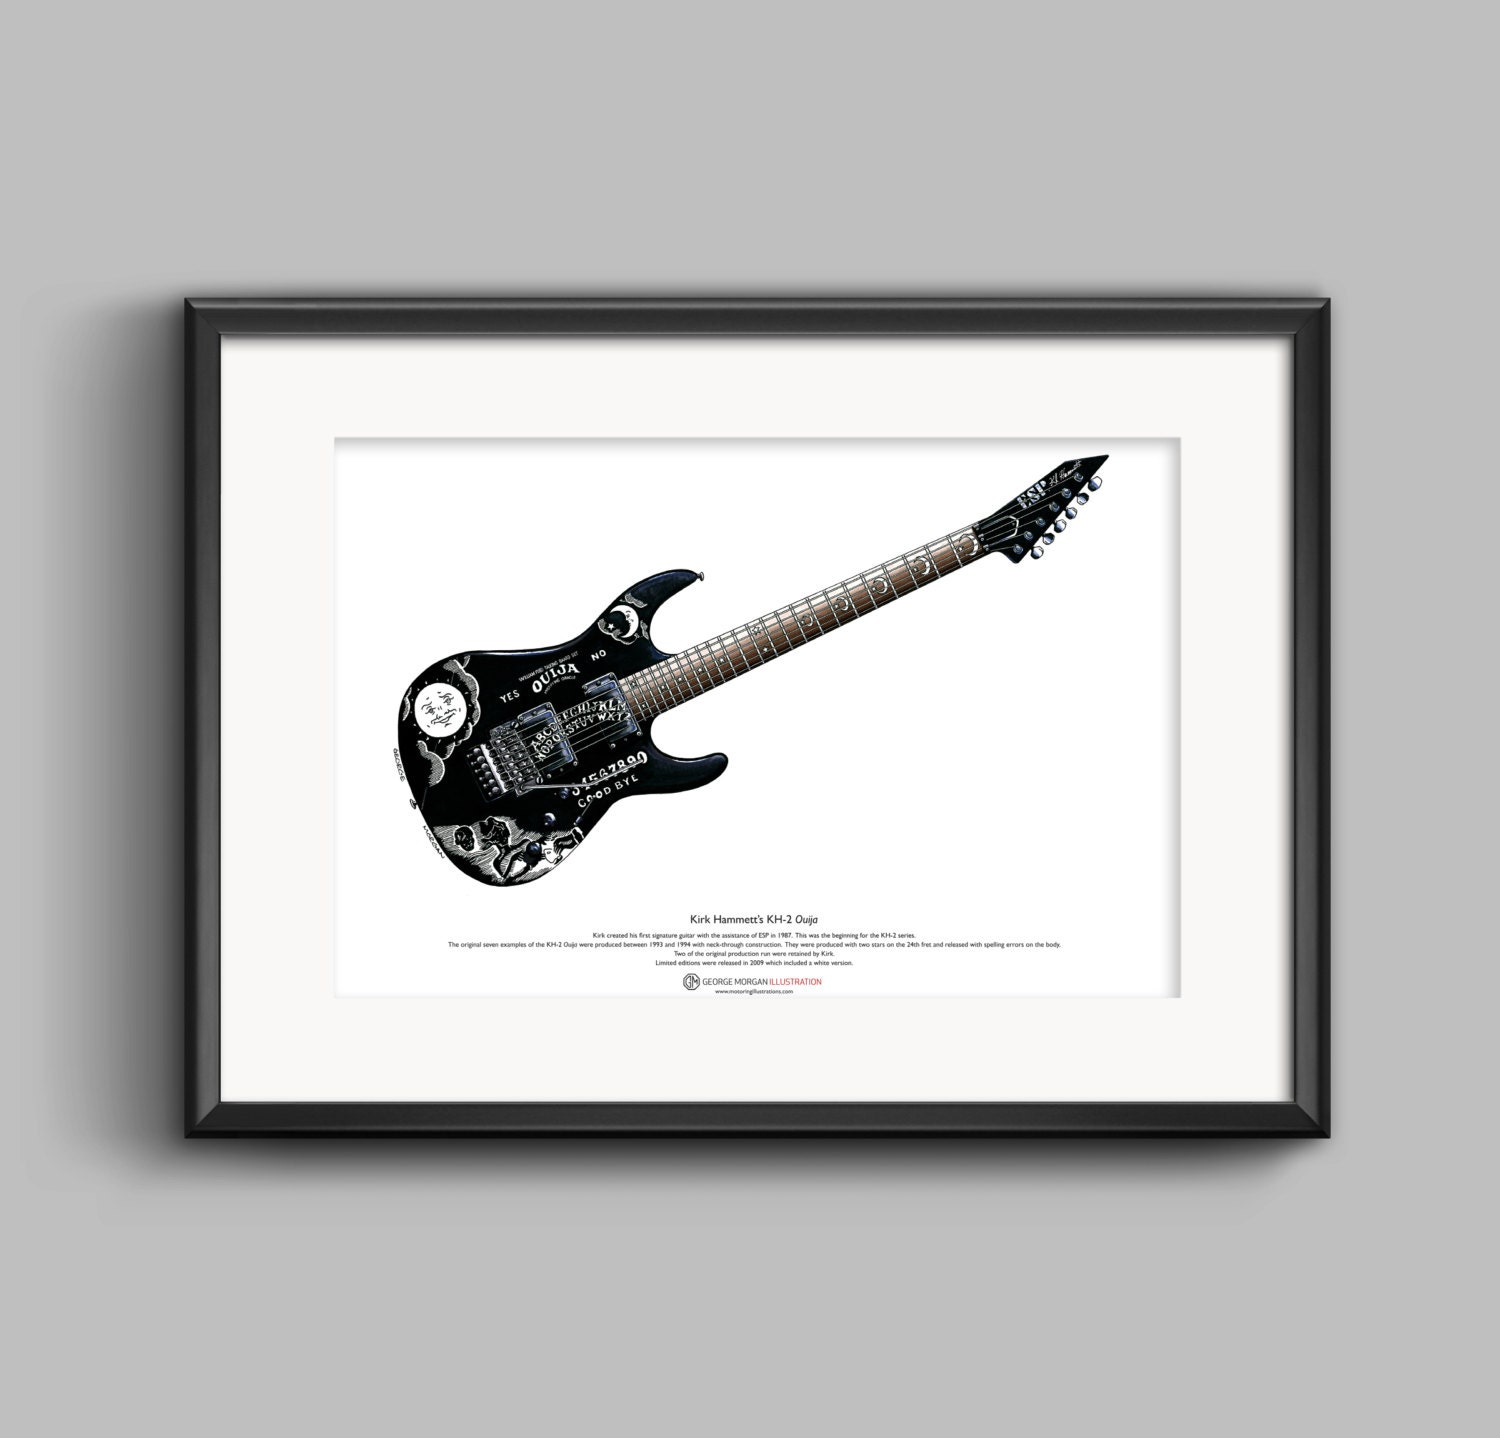 Kirk Hammett S Esp Kh 2 Ouija Guitar Art Poster A3 Size Etsy